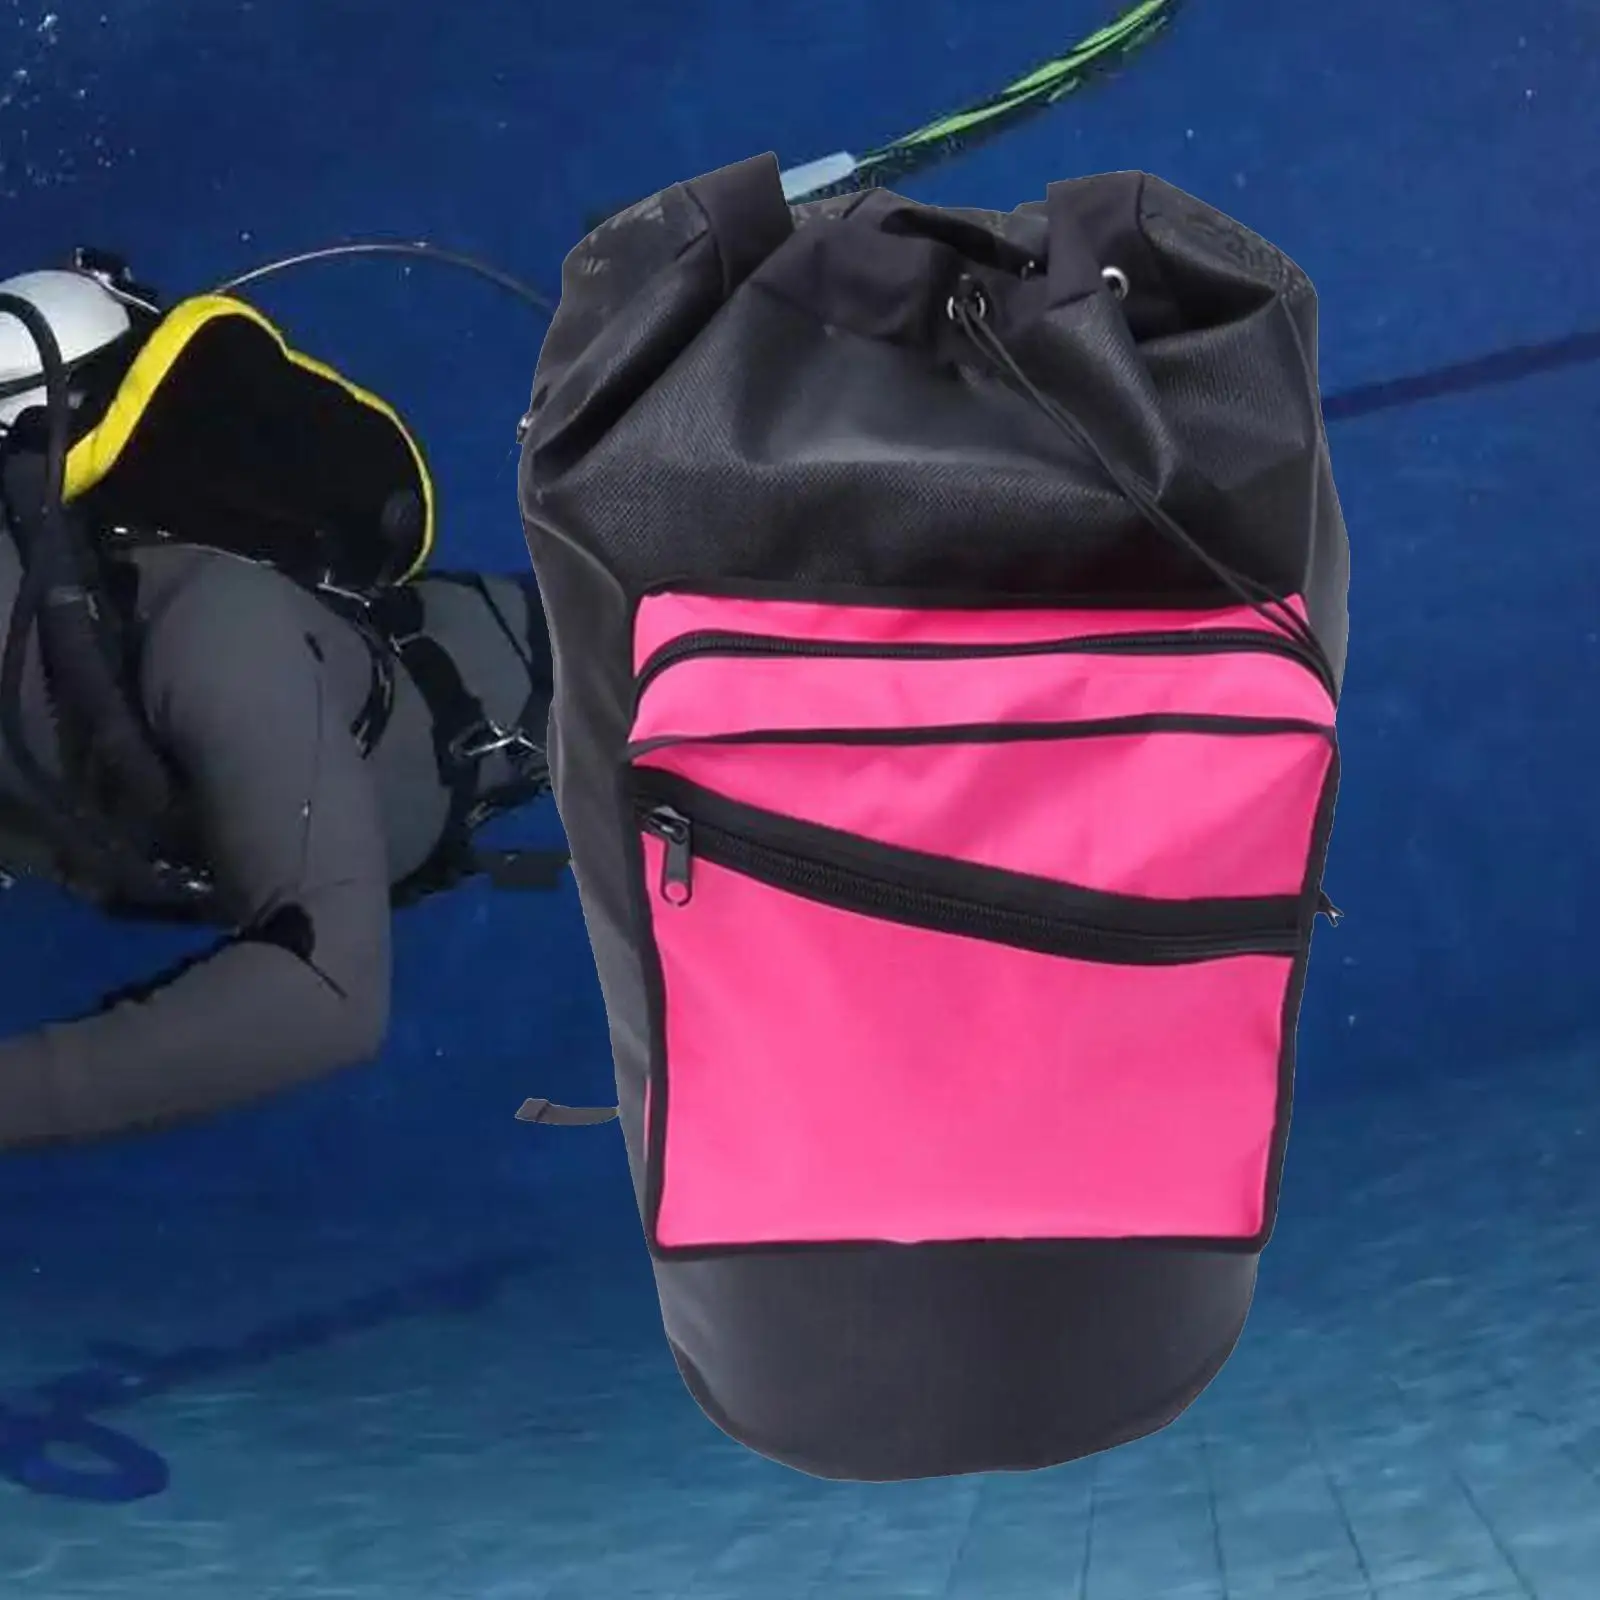 diving-backpack-duffle-external-pocket-snorkeling-gear-backpack-for-boating-water-sports-surfing-underwater-adventure-rafting